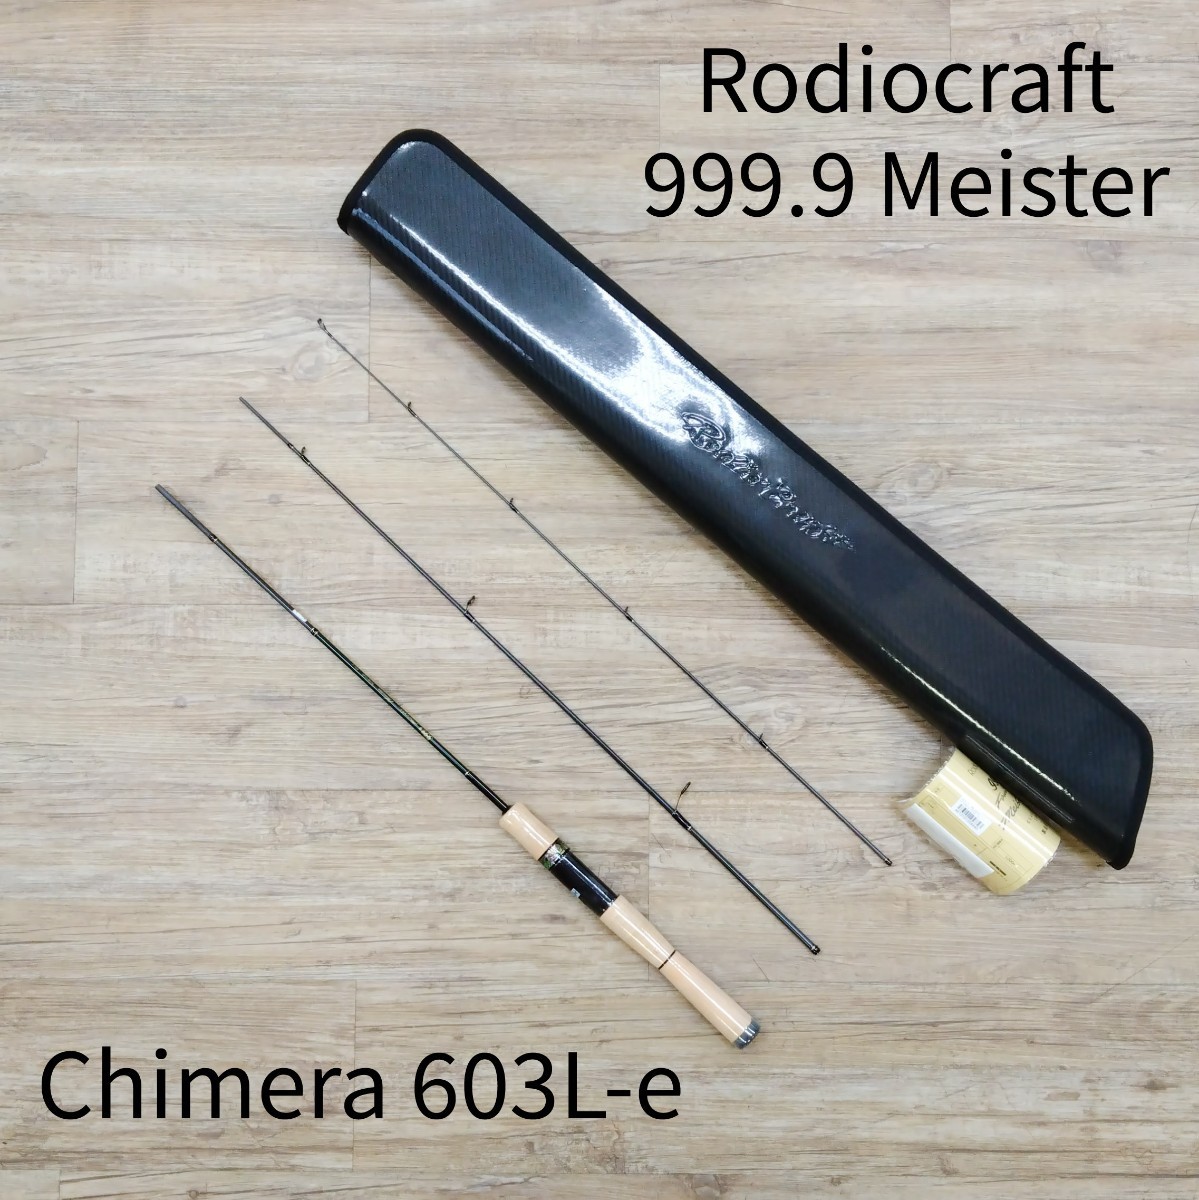 Rodiocraft 999.9 Meister Chimera 603L-e ロデオクラフト キメラ エリアトラウト ロッド_画像1